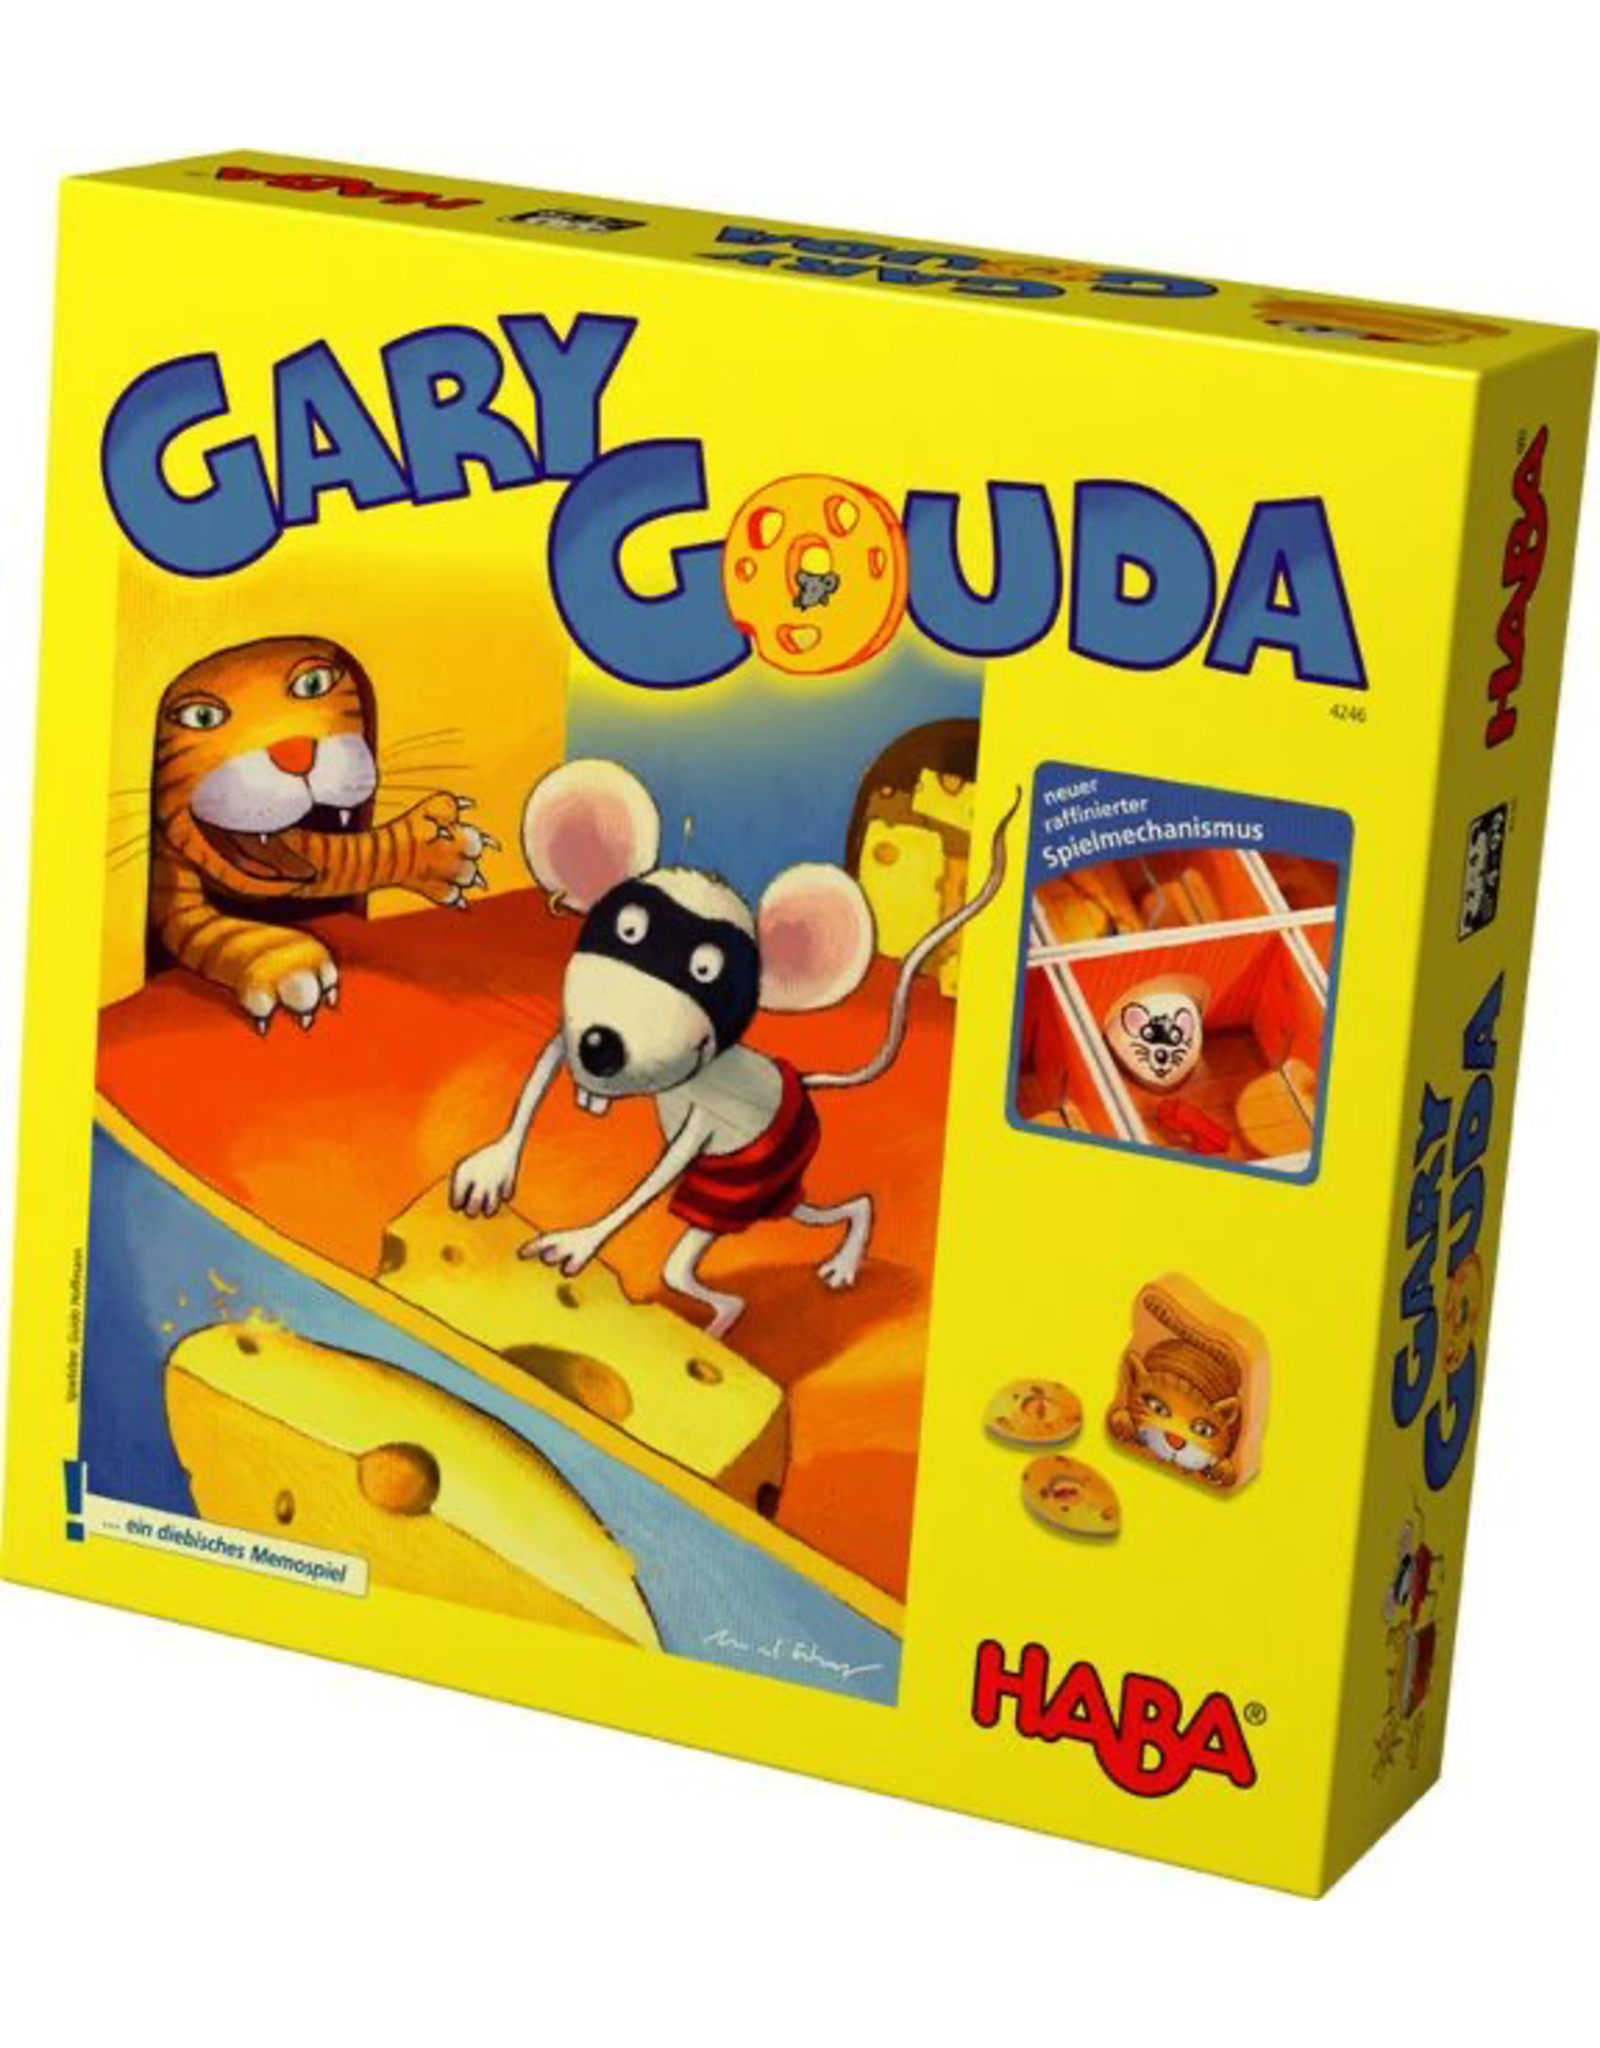 HABA Gary Gouda